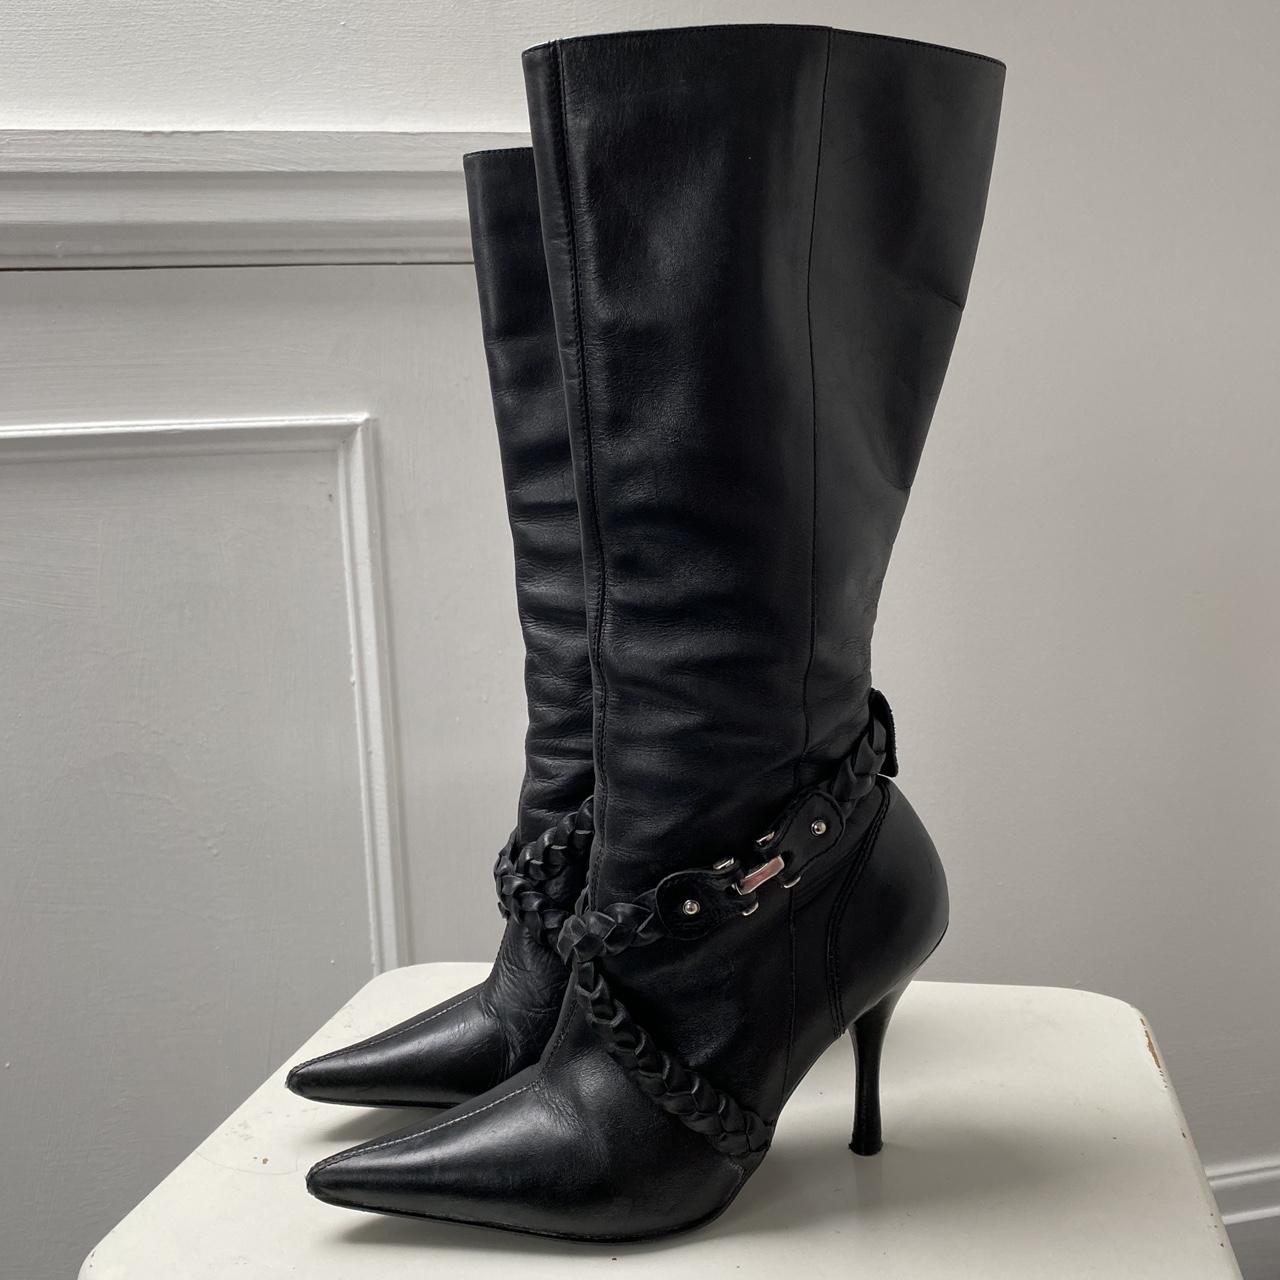 🔥Black leather stiletto boot. Insane Ravel pointy... - Depop